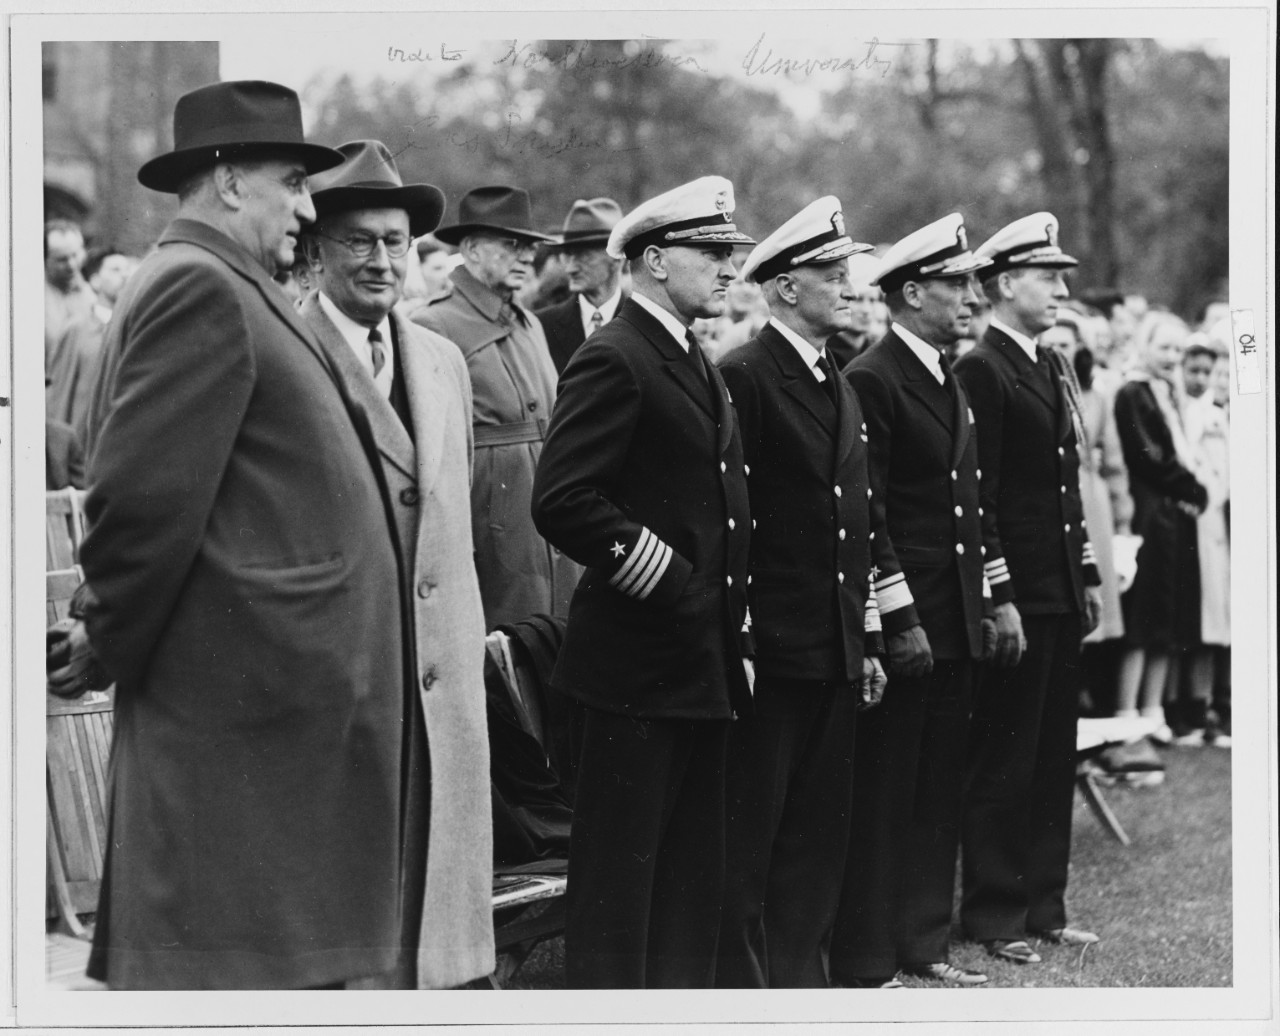 Fleet Admiral Nimitz with Fellow Officers